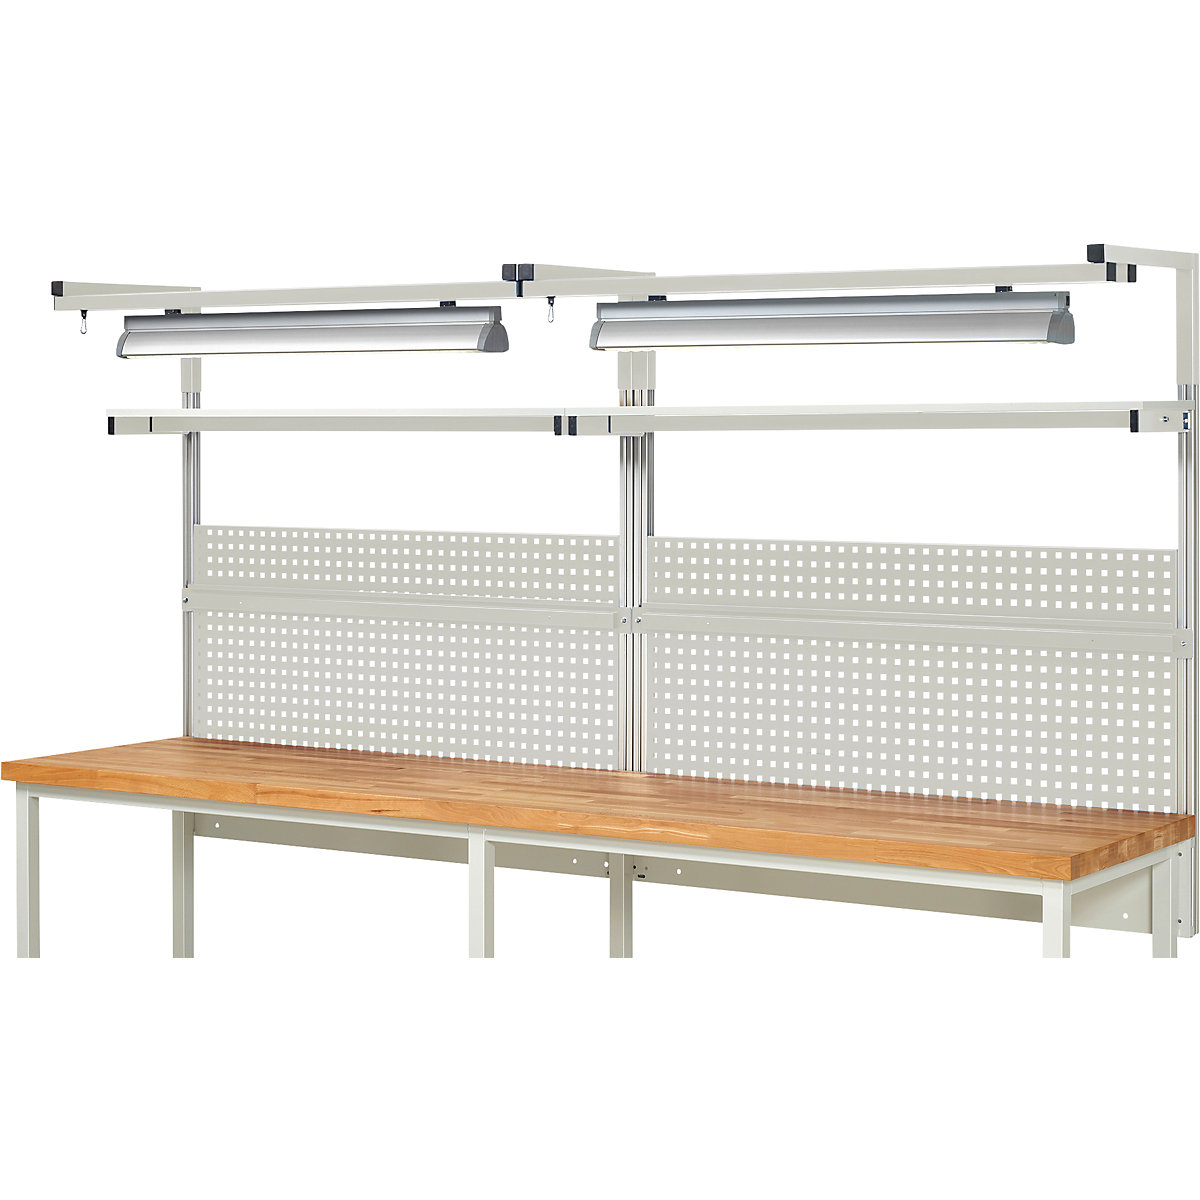 Complete modular system set 4 – RAU, for workbench, width 3000 mm